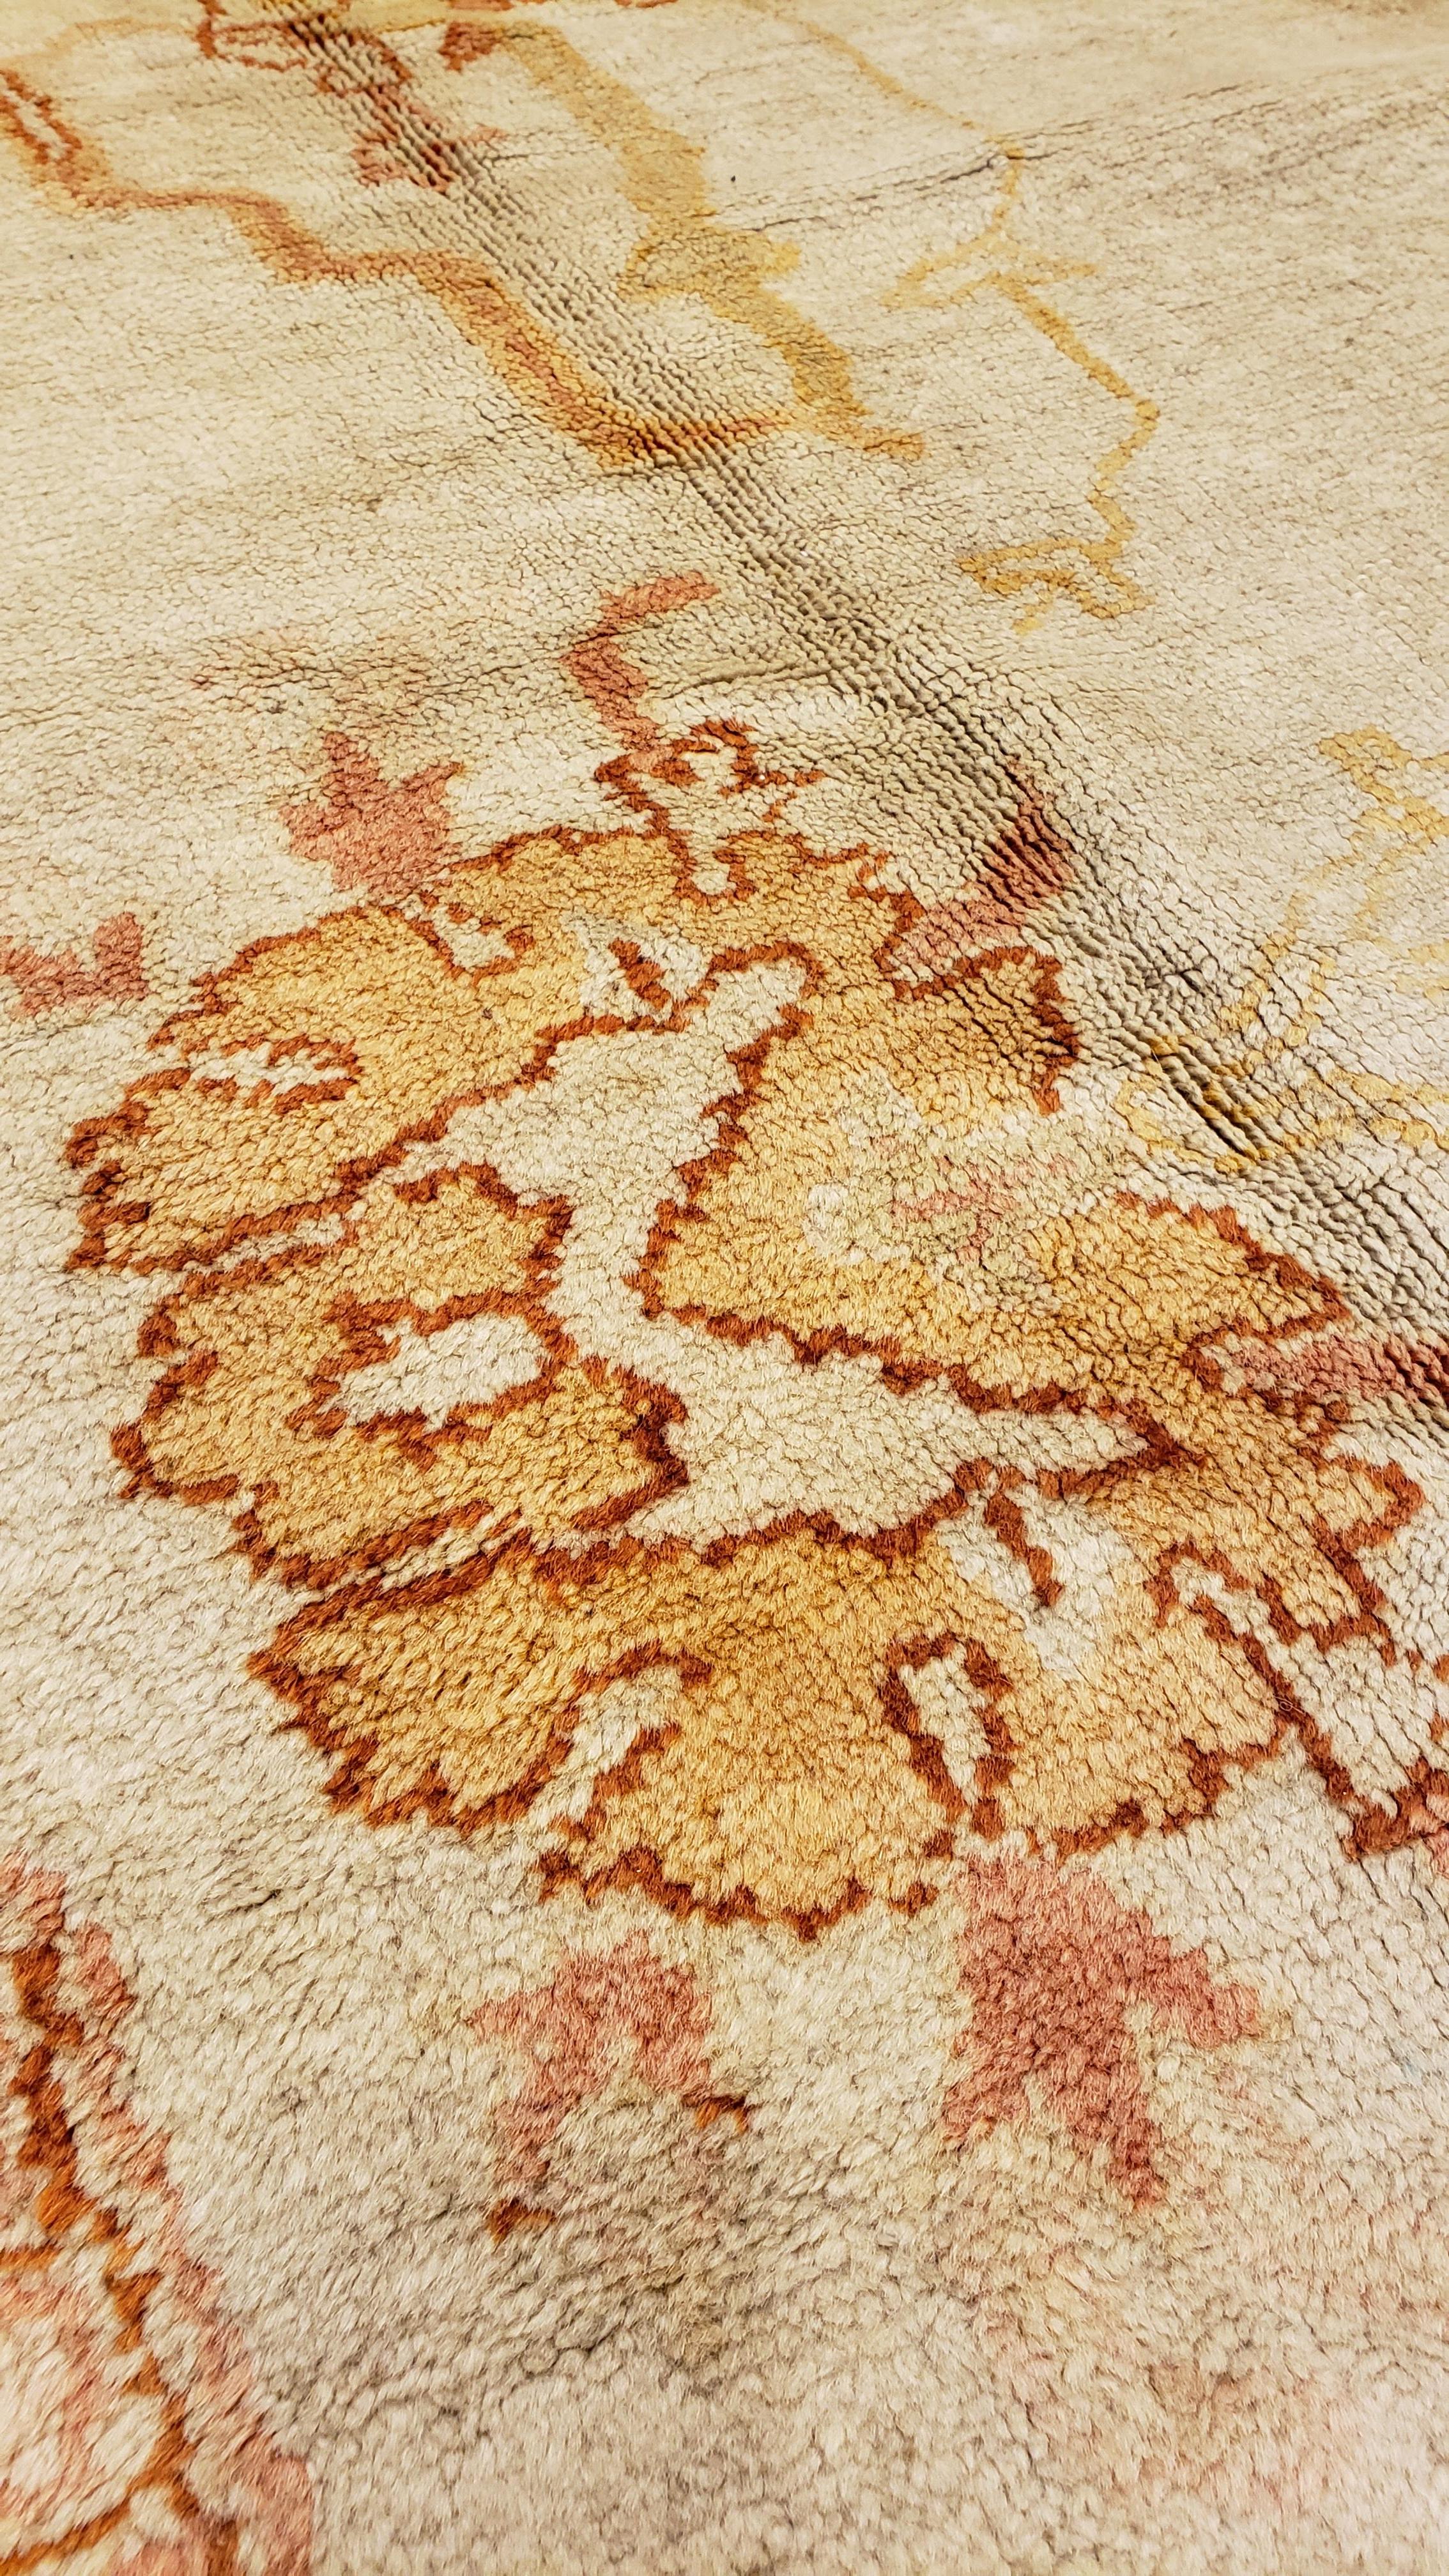 19th Century Antique Oushak Carpet, Handmade Turkish Oriental Rug, Beige, Taupe, Soft Salmon For Sale